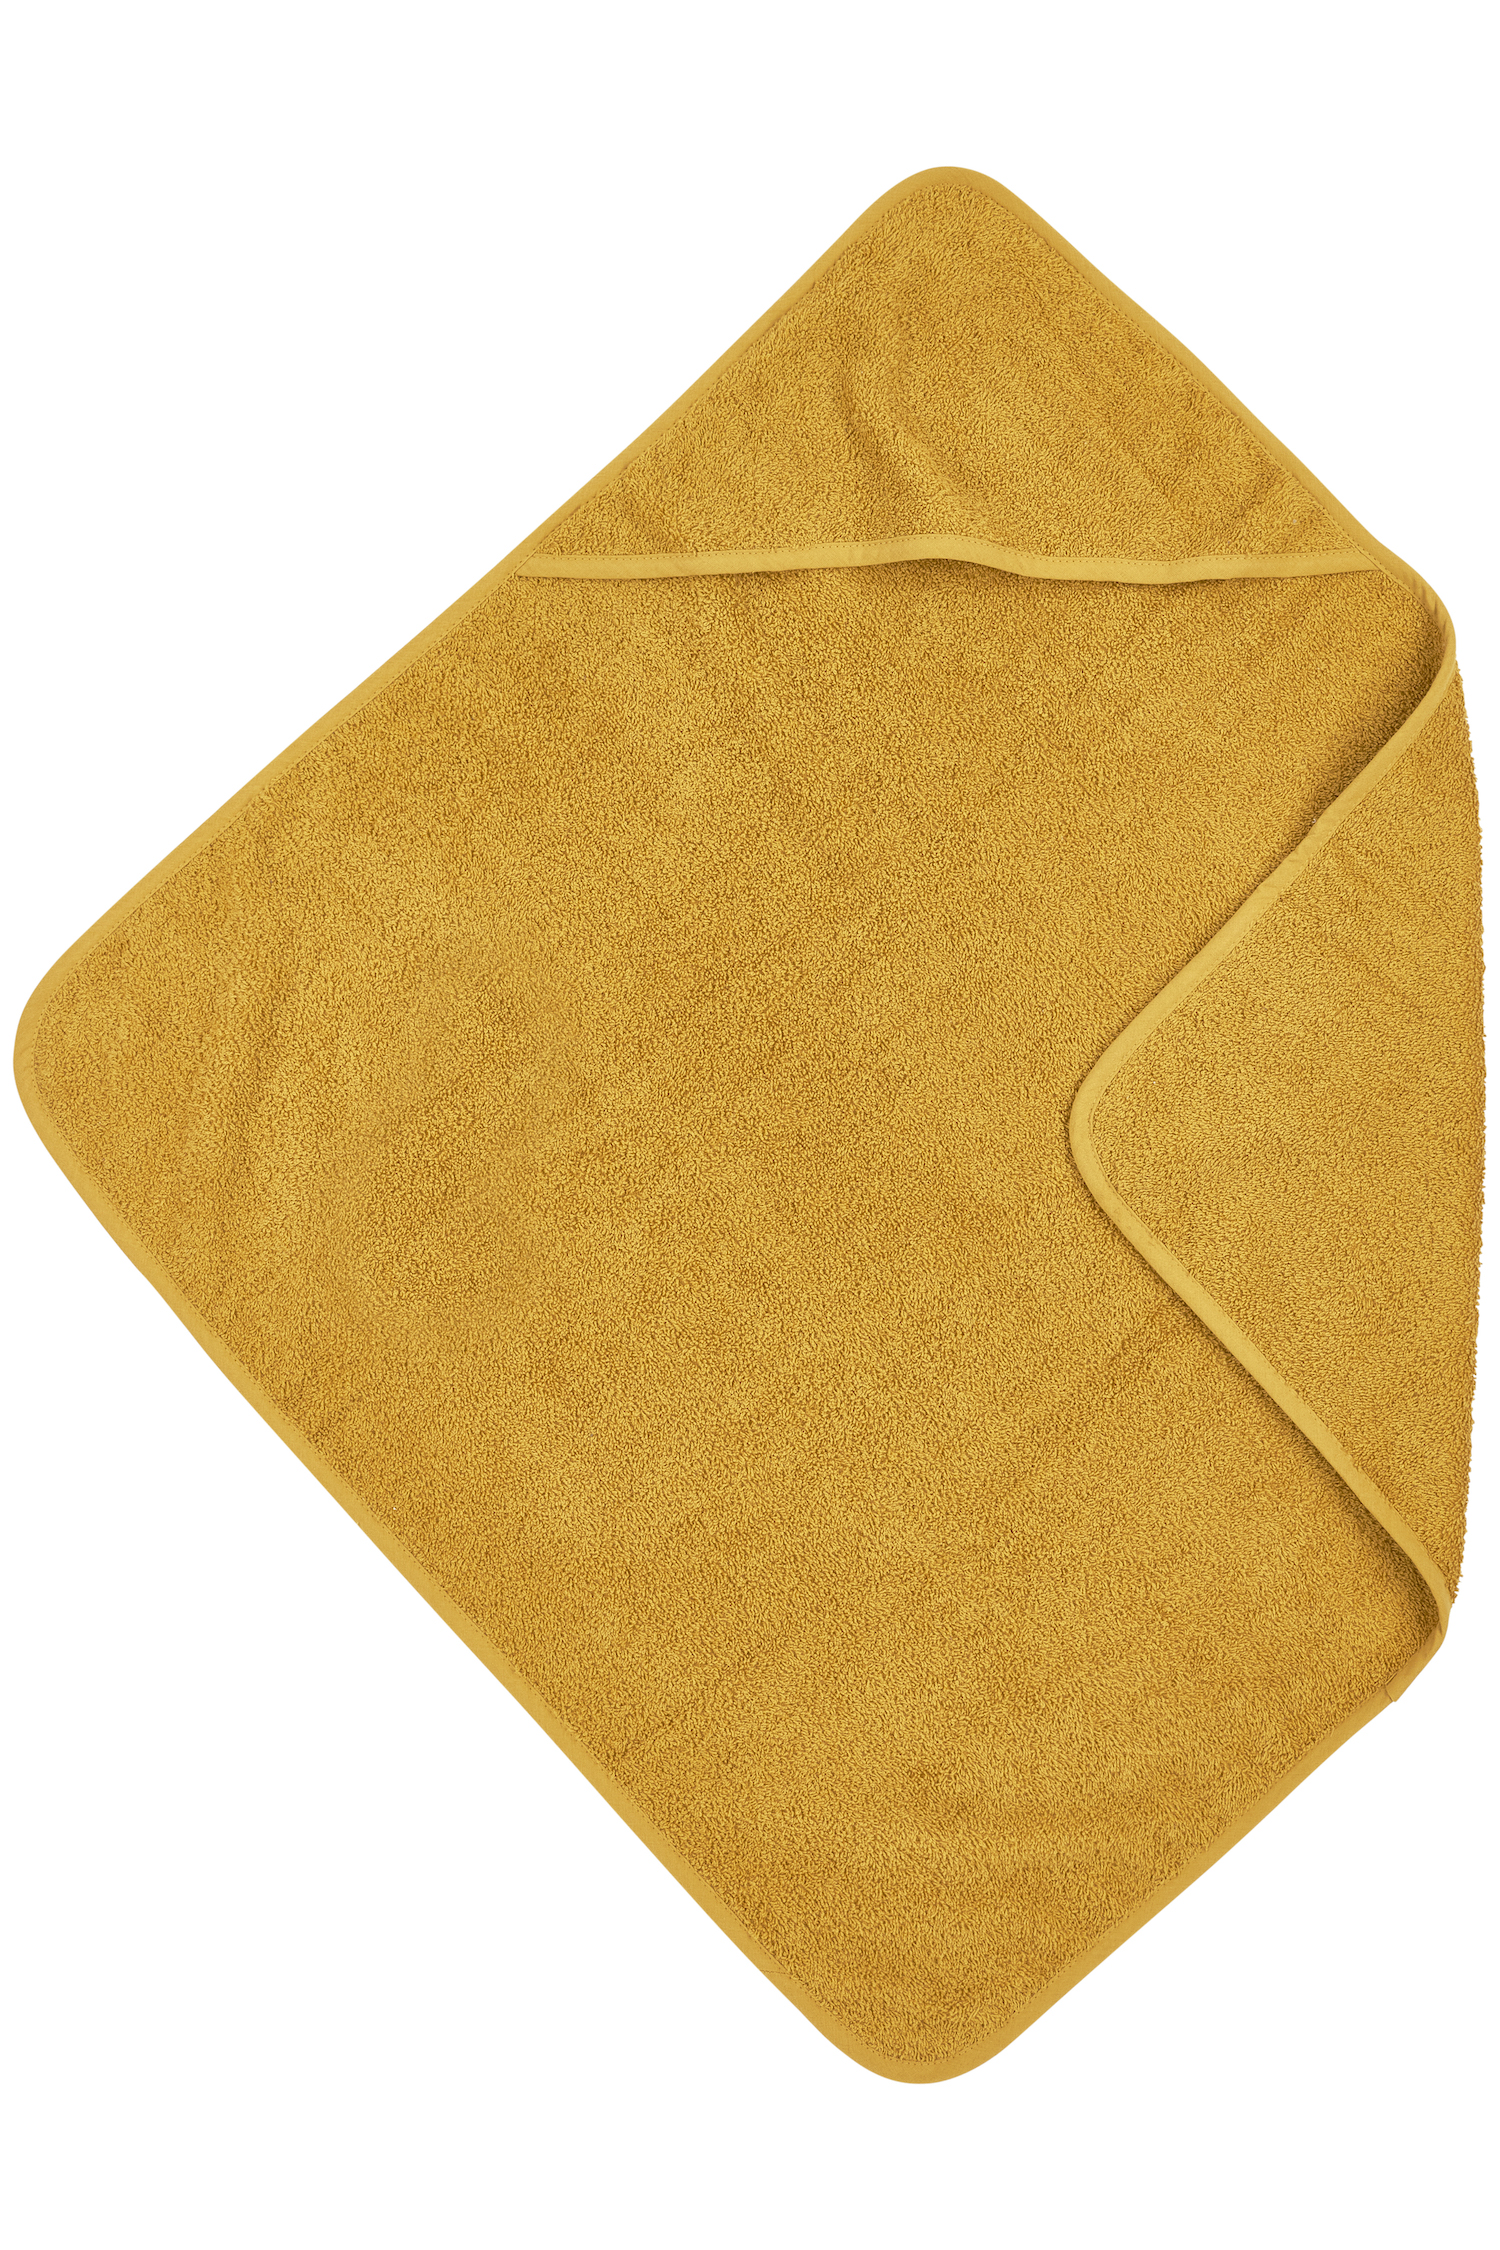 Bathcape Basic Terry - Honey Gold - 75x75cm